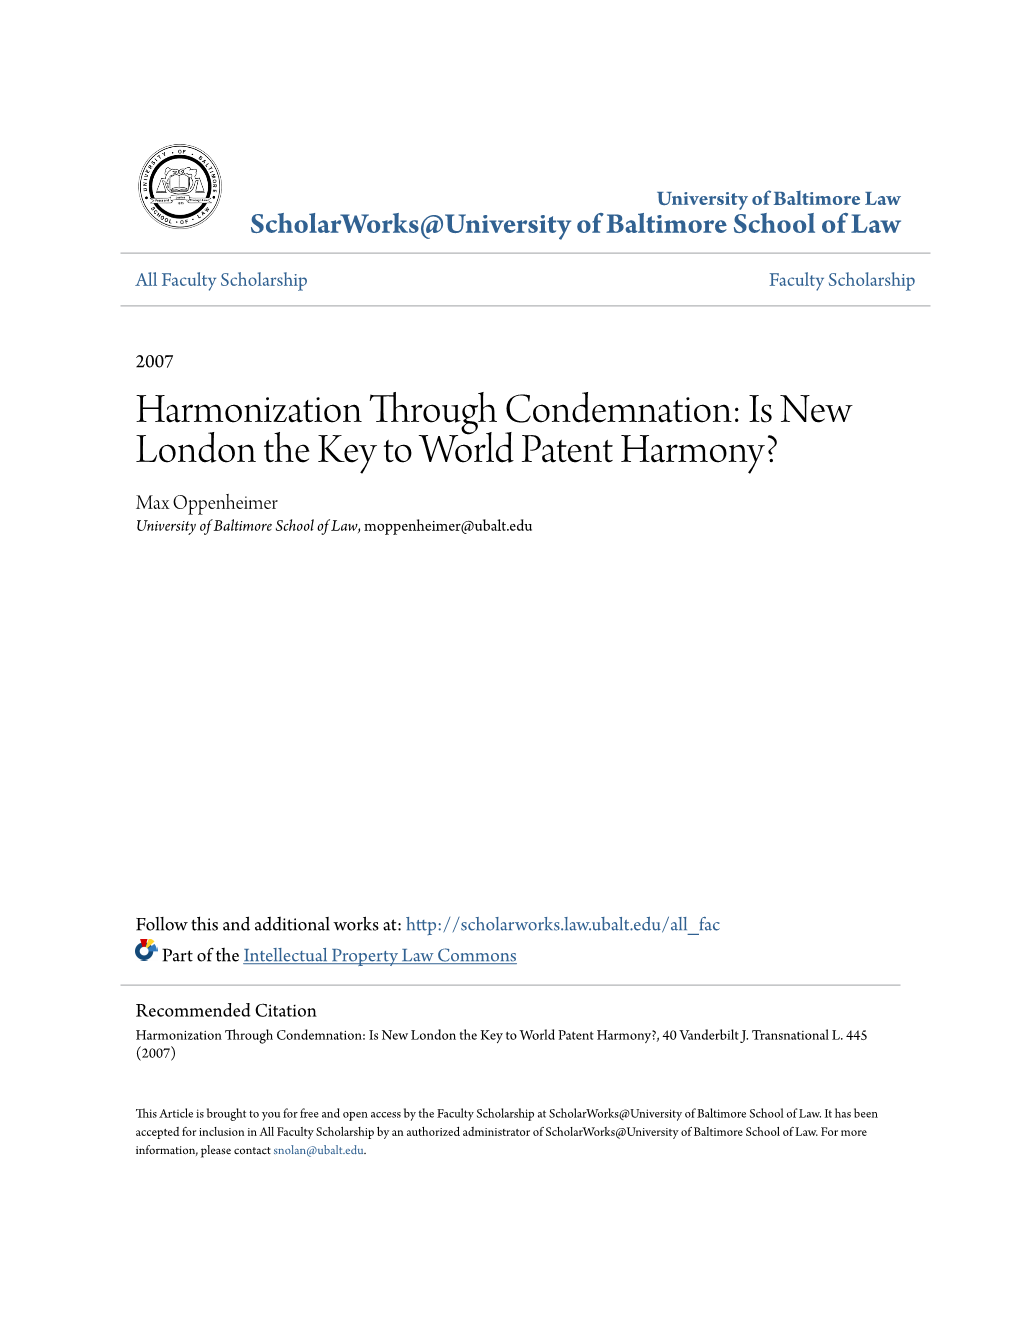 Is New London the Key to World Patent Harmony? Max Oppenheimer University of Baltimore School of Law, Moppenheimer@Ubalt.Edu